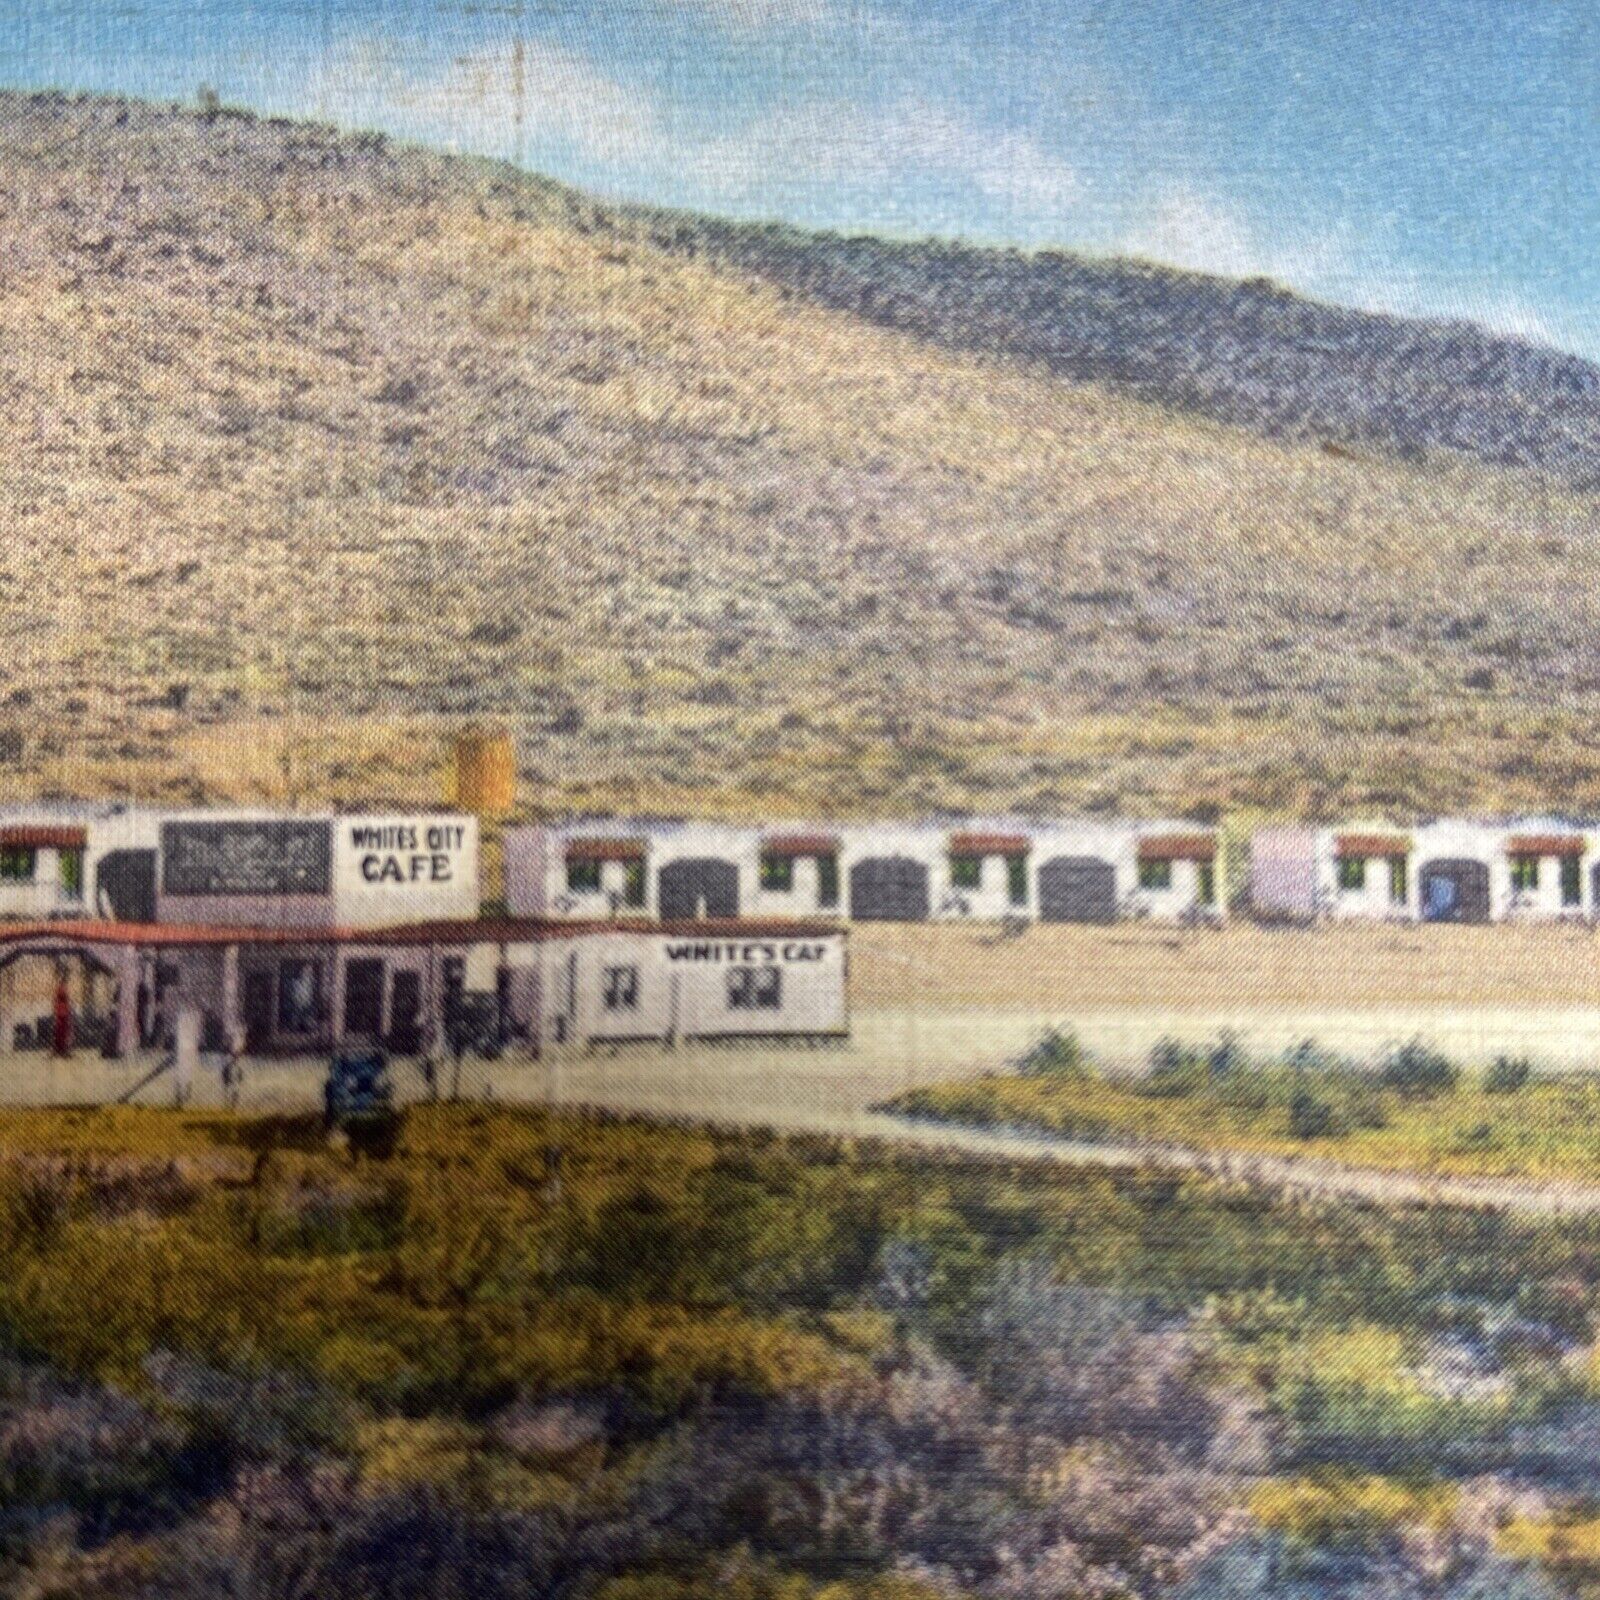 Postcard NM White's City Cafe Carlsbad Caverns Curt Teich & Co. 1934